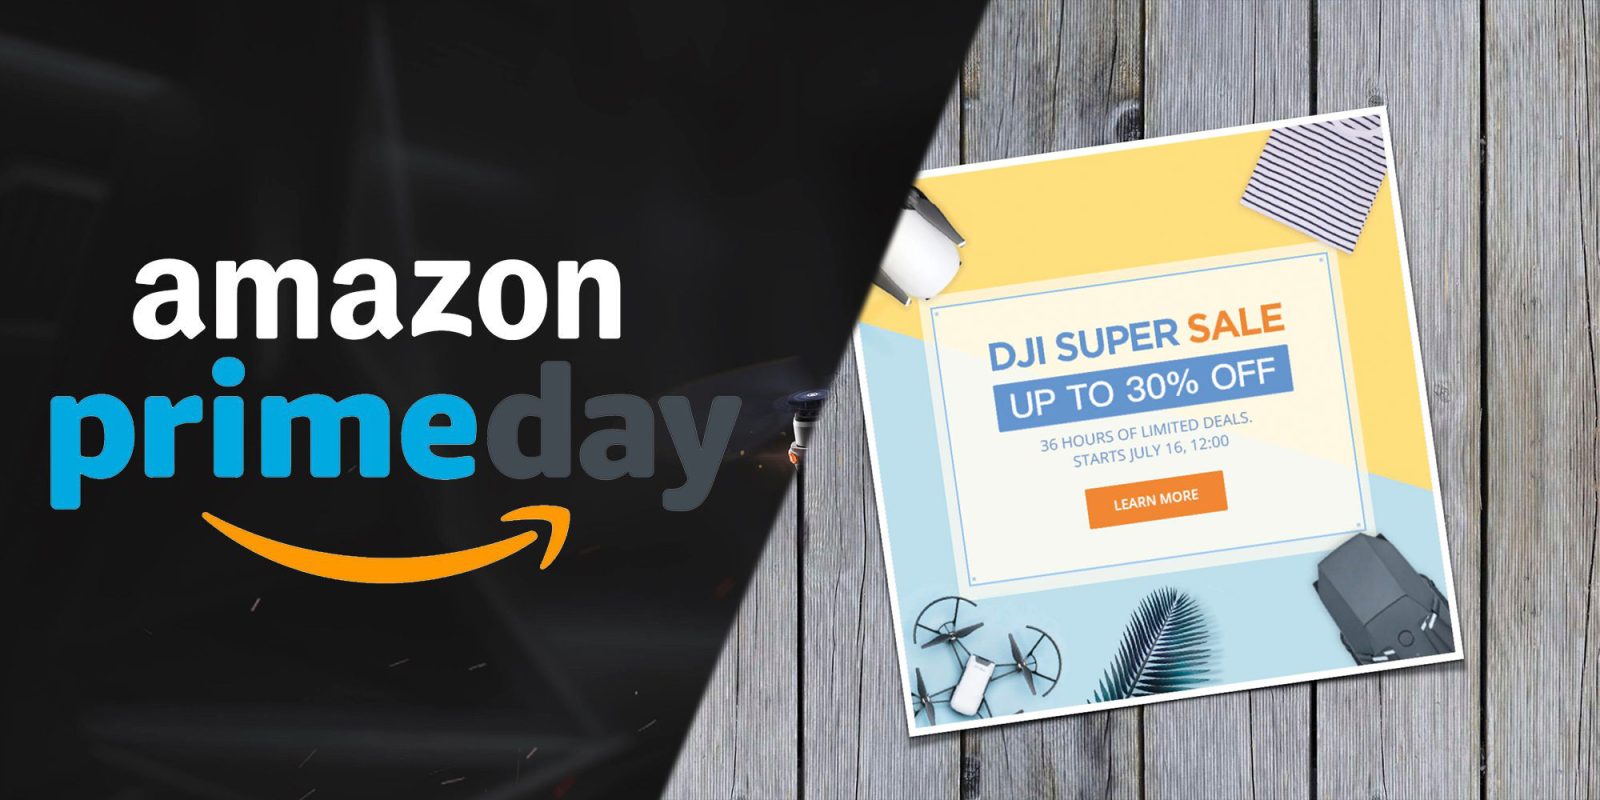 Amazon Prime Day and DJI Super Sale event